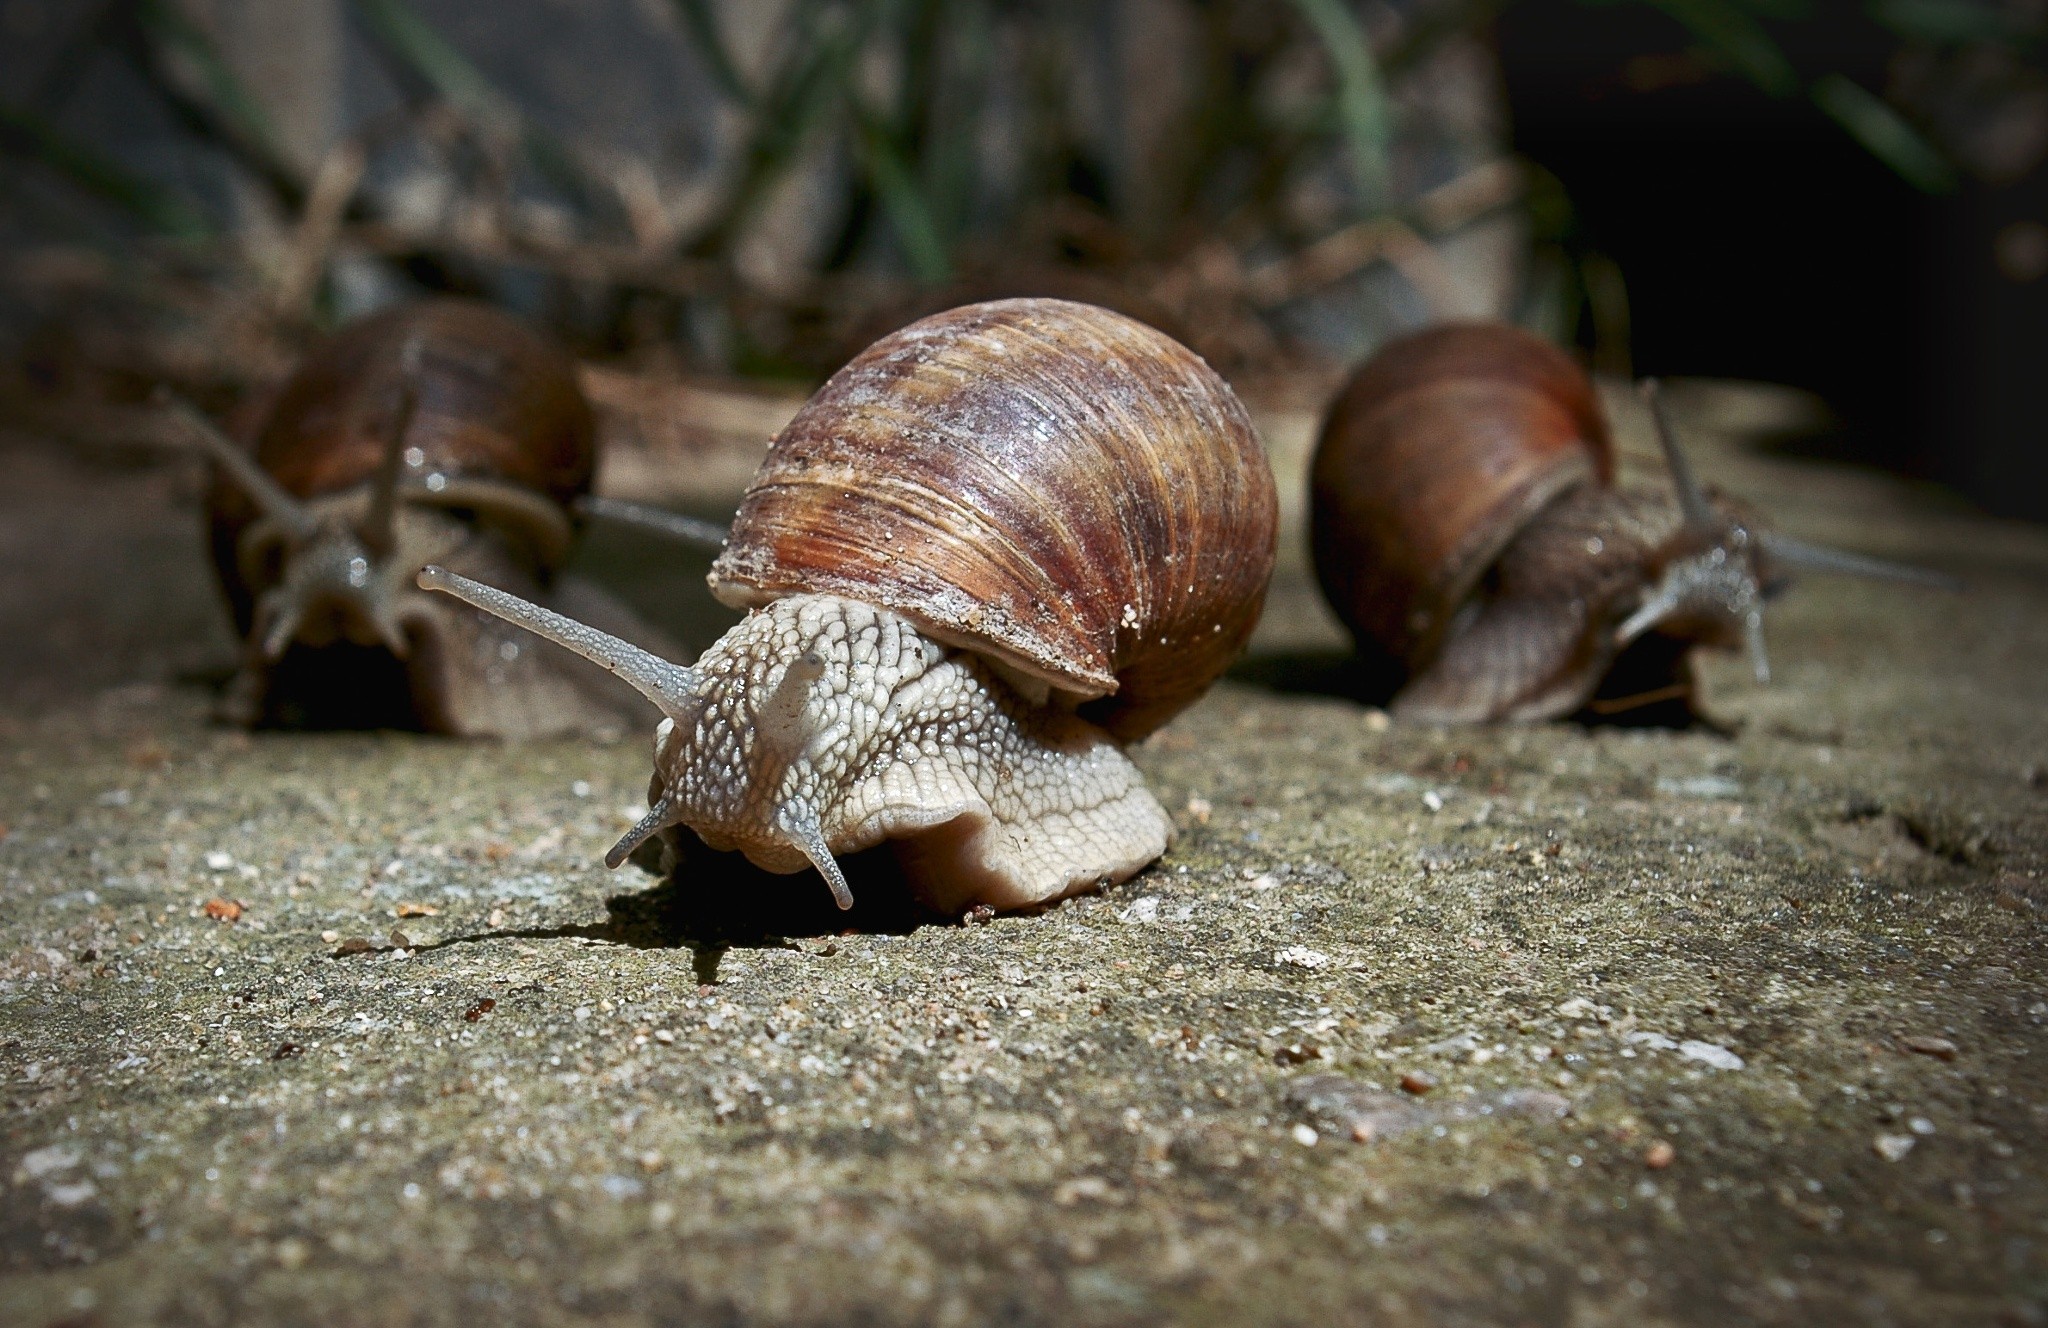 General 2048x1328 macro animals snail